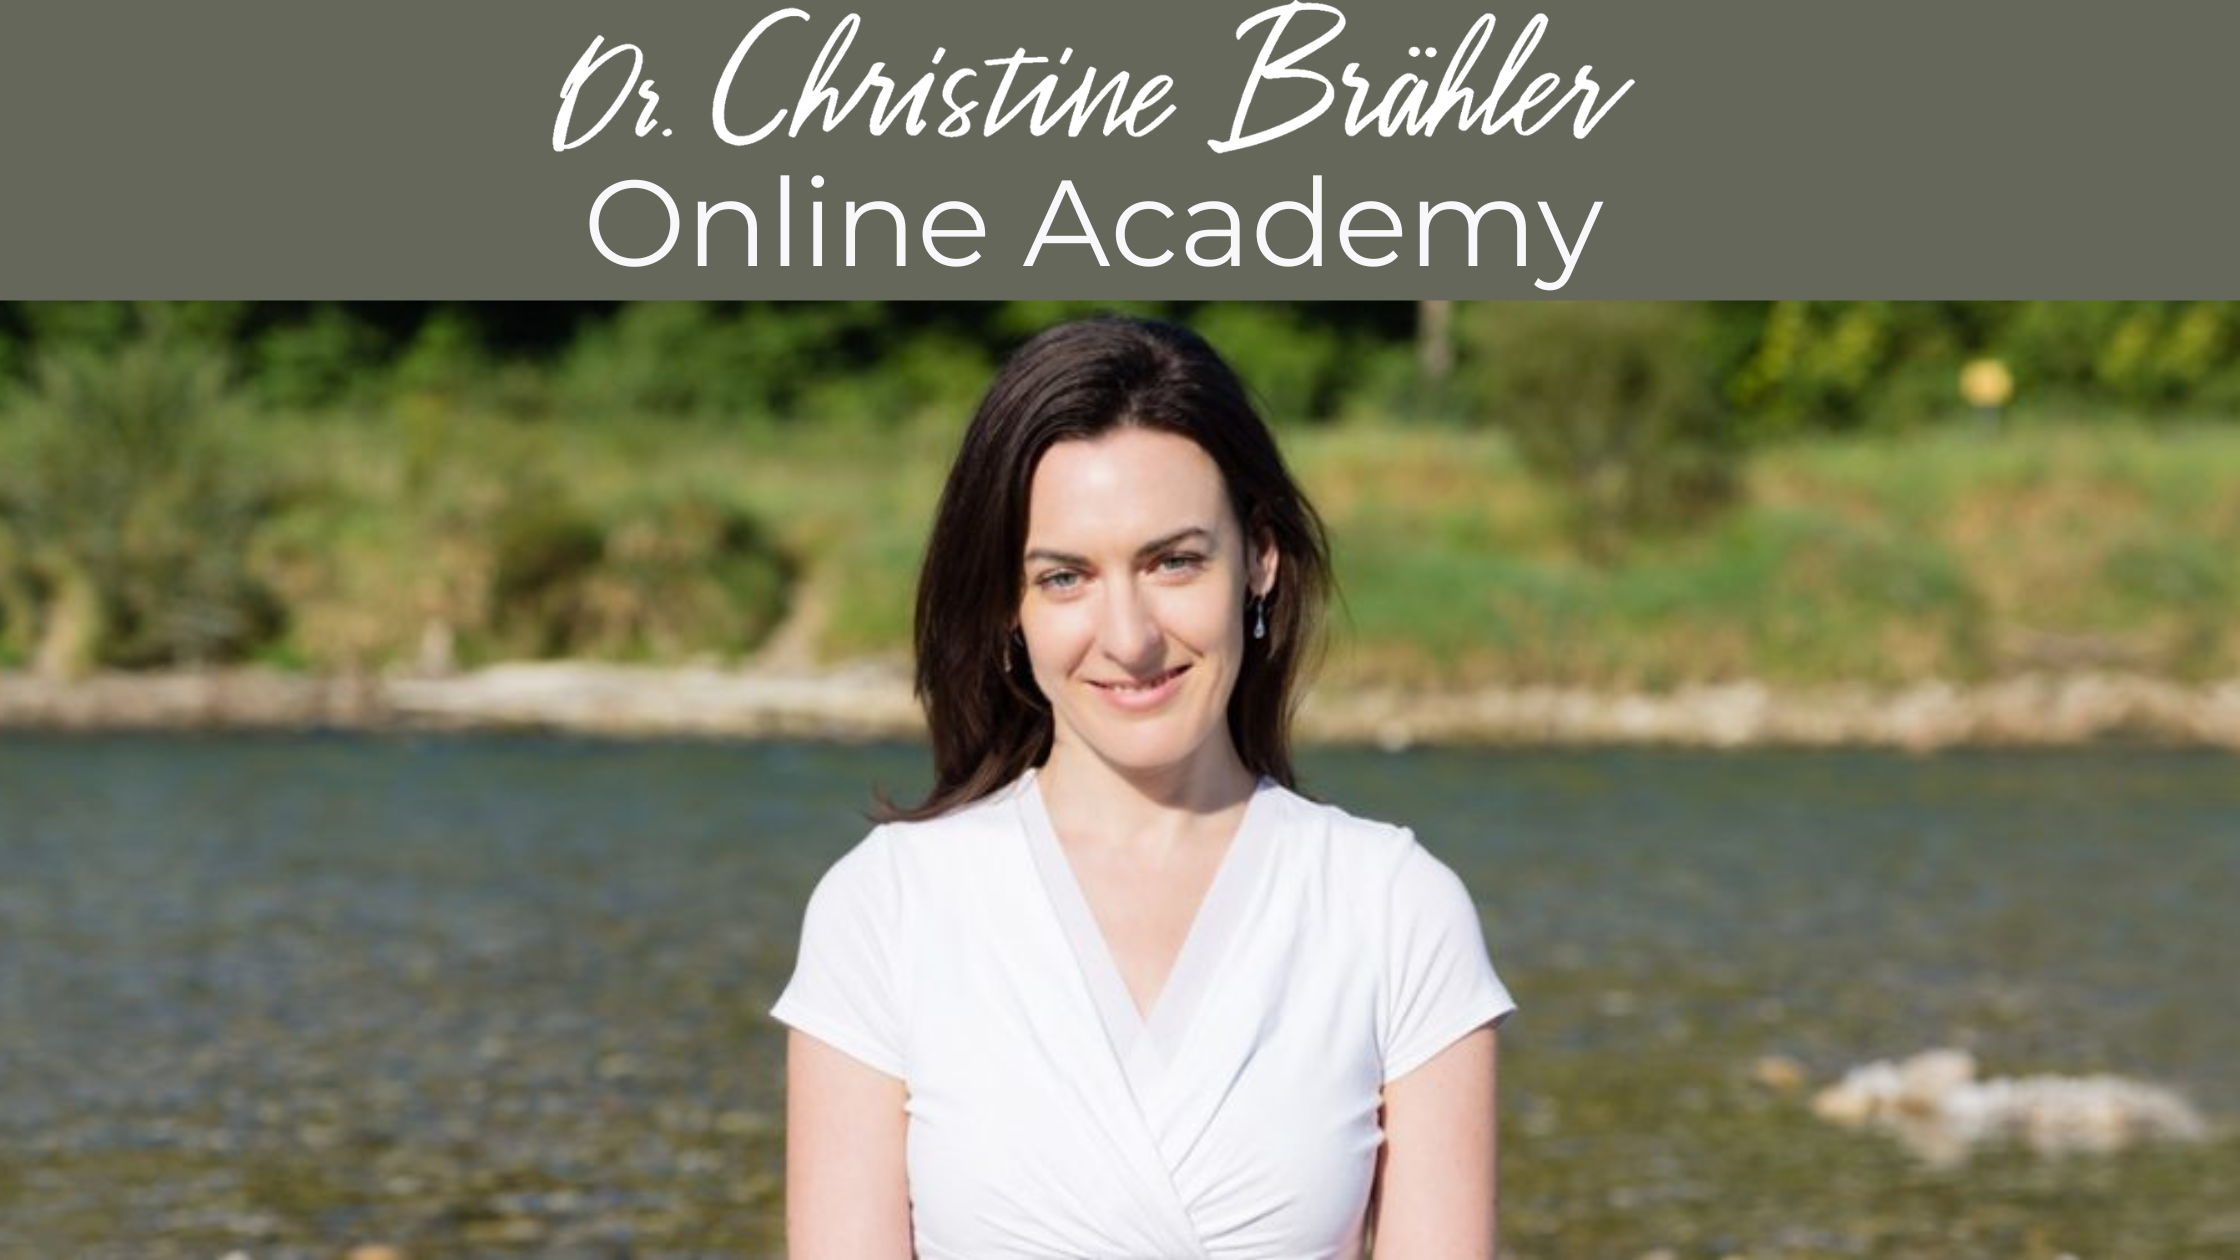 Dr. Christine Braehler